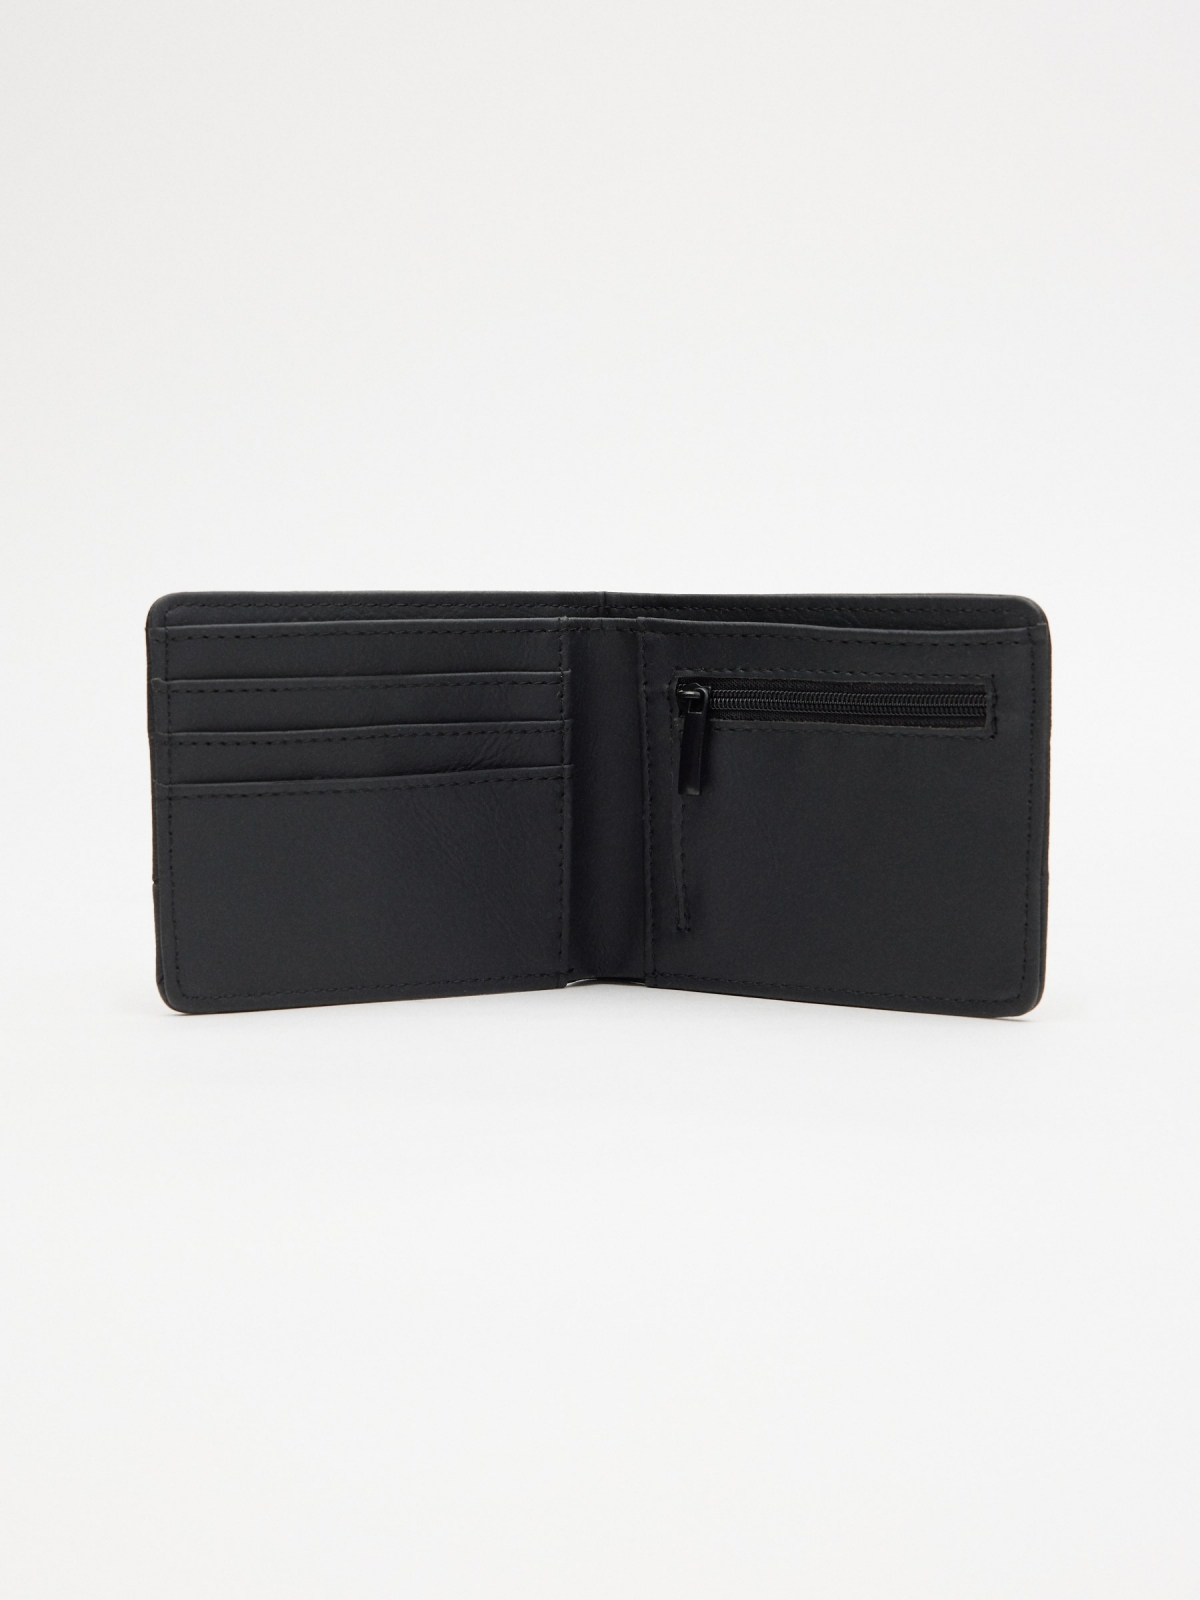 INSIDE leatherette briefcase black detail view